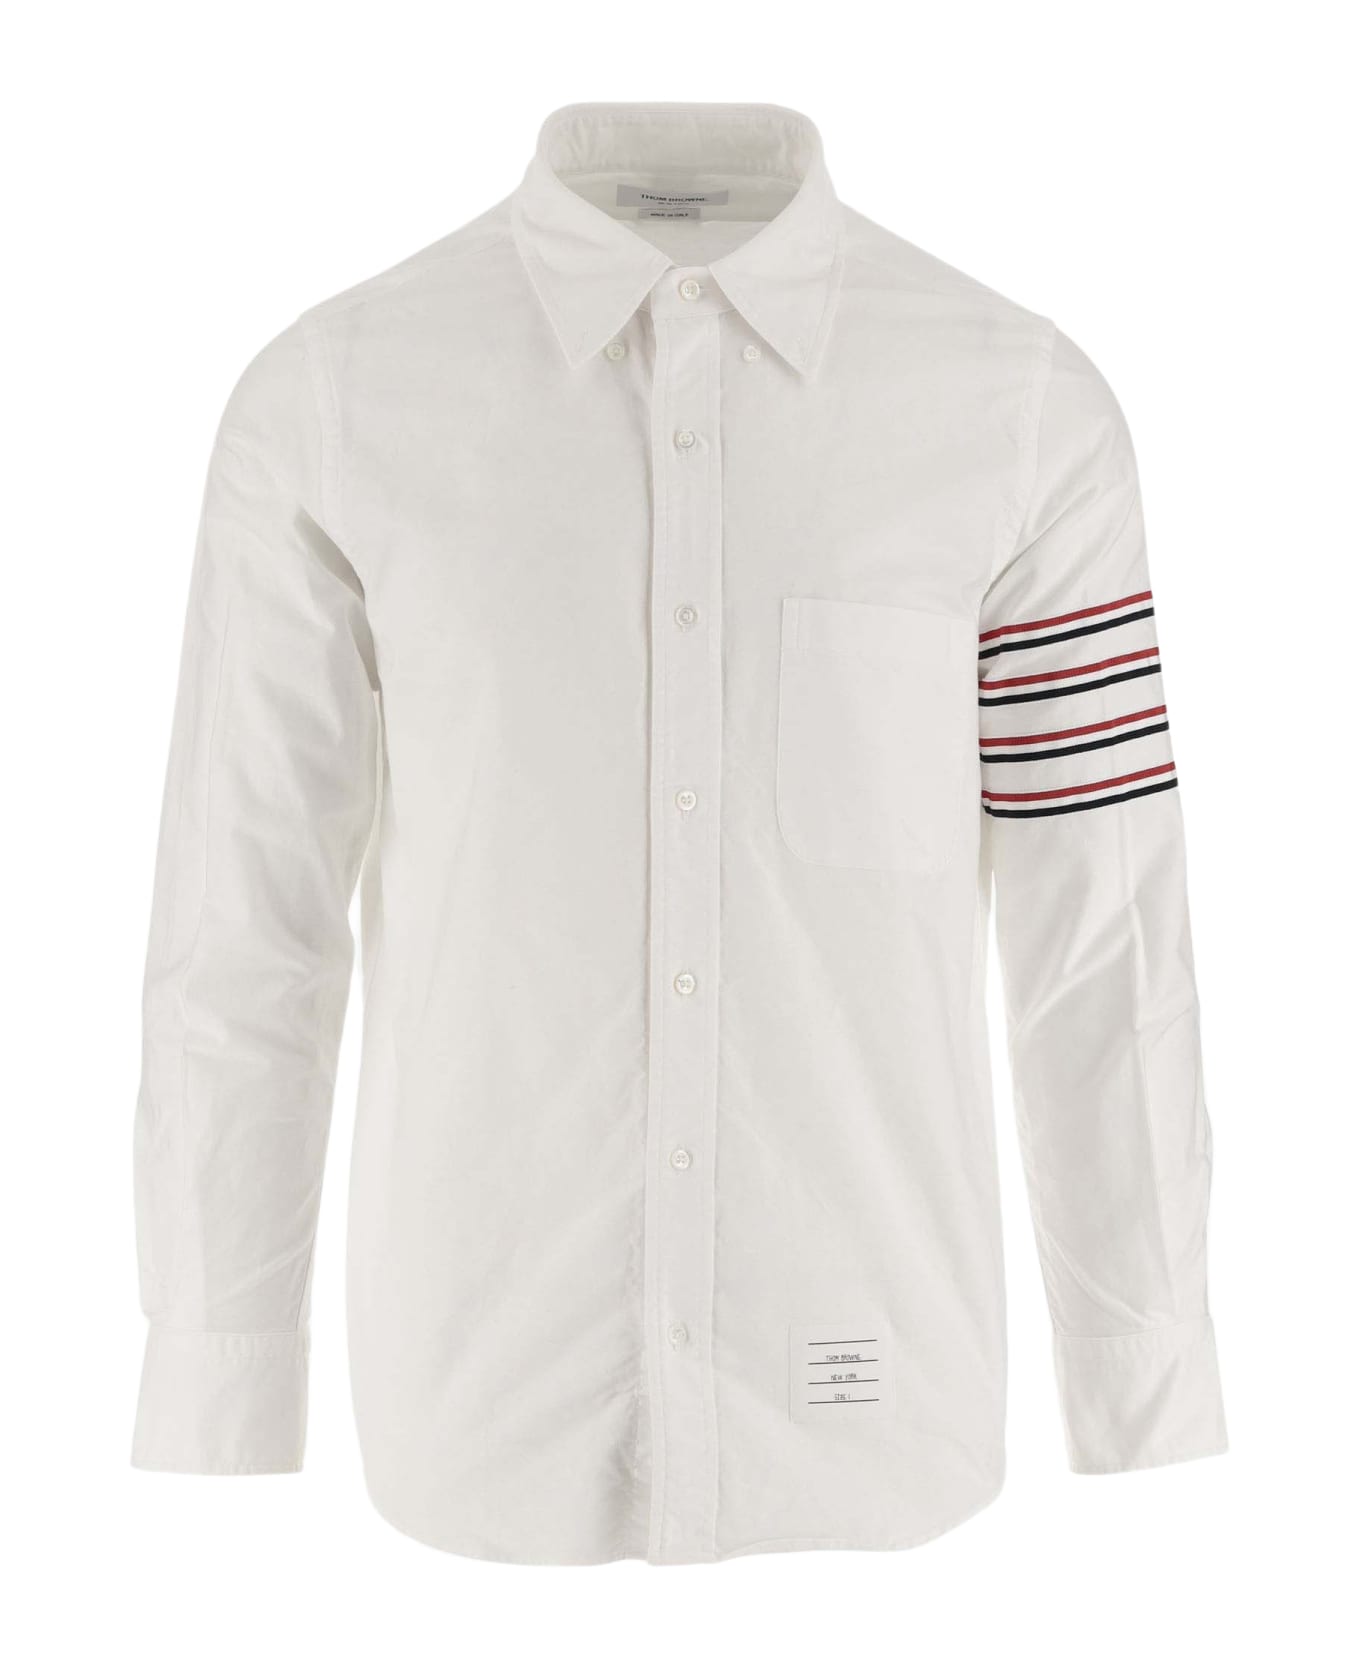 Thom Browne 4 Bar Tricolor Cotton Shirt - White